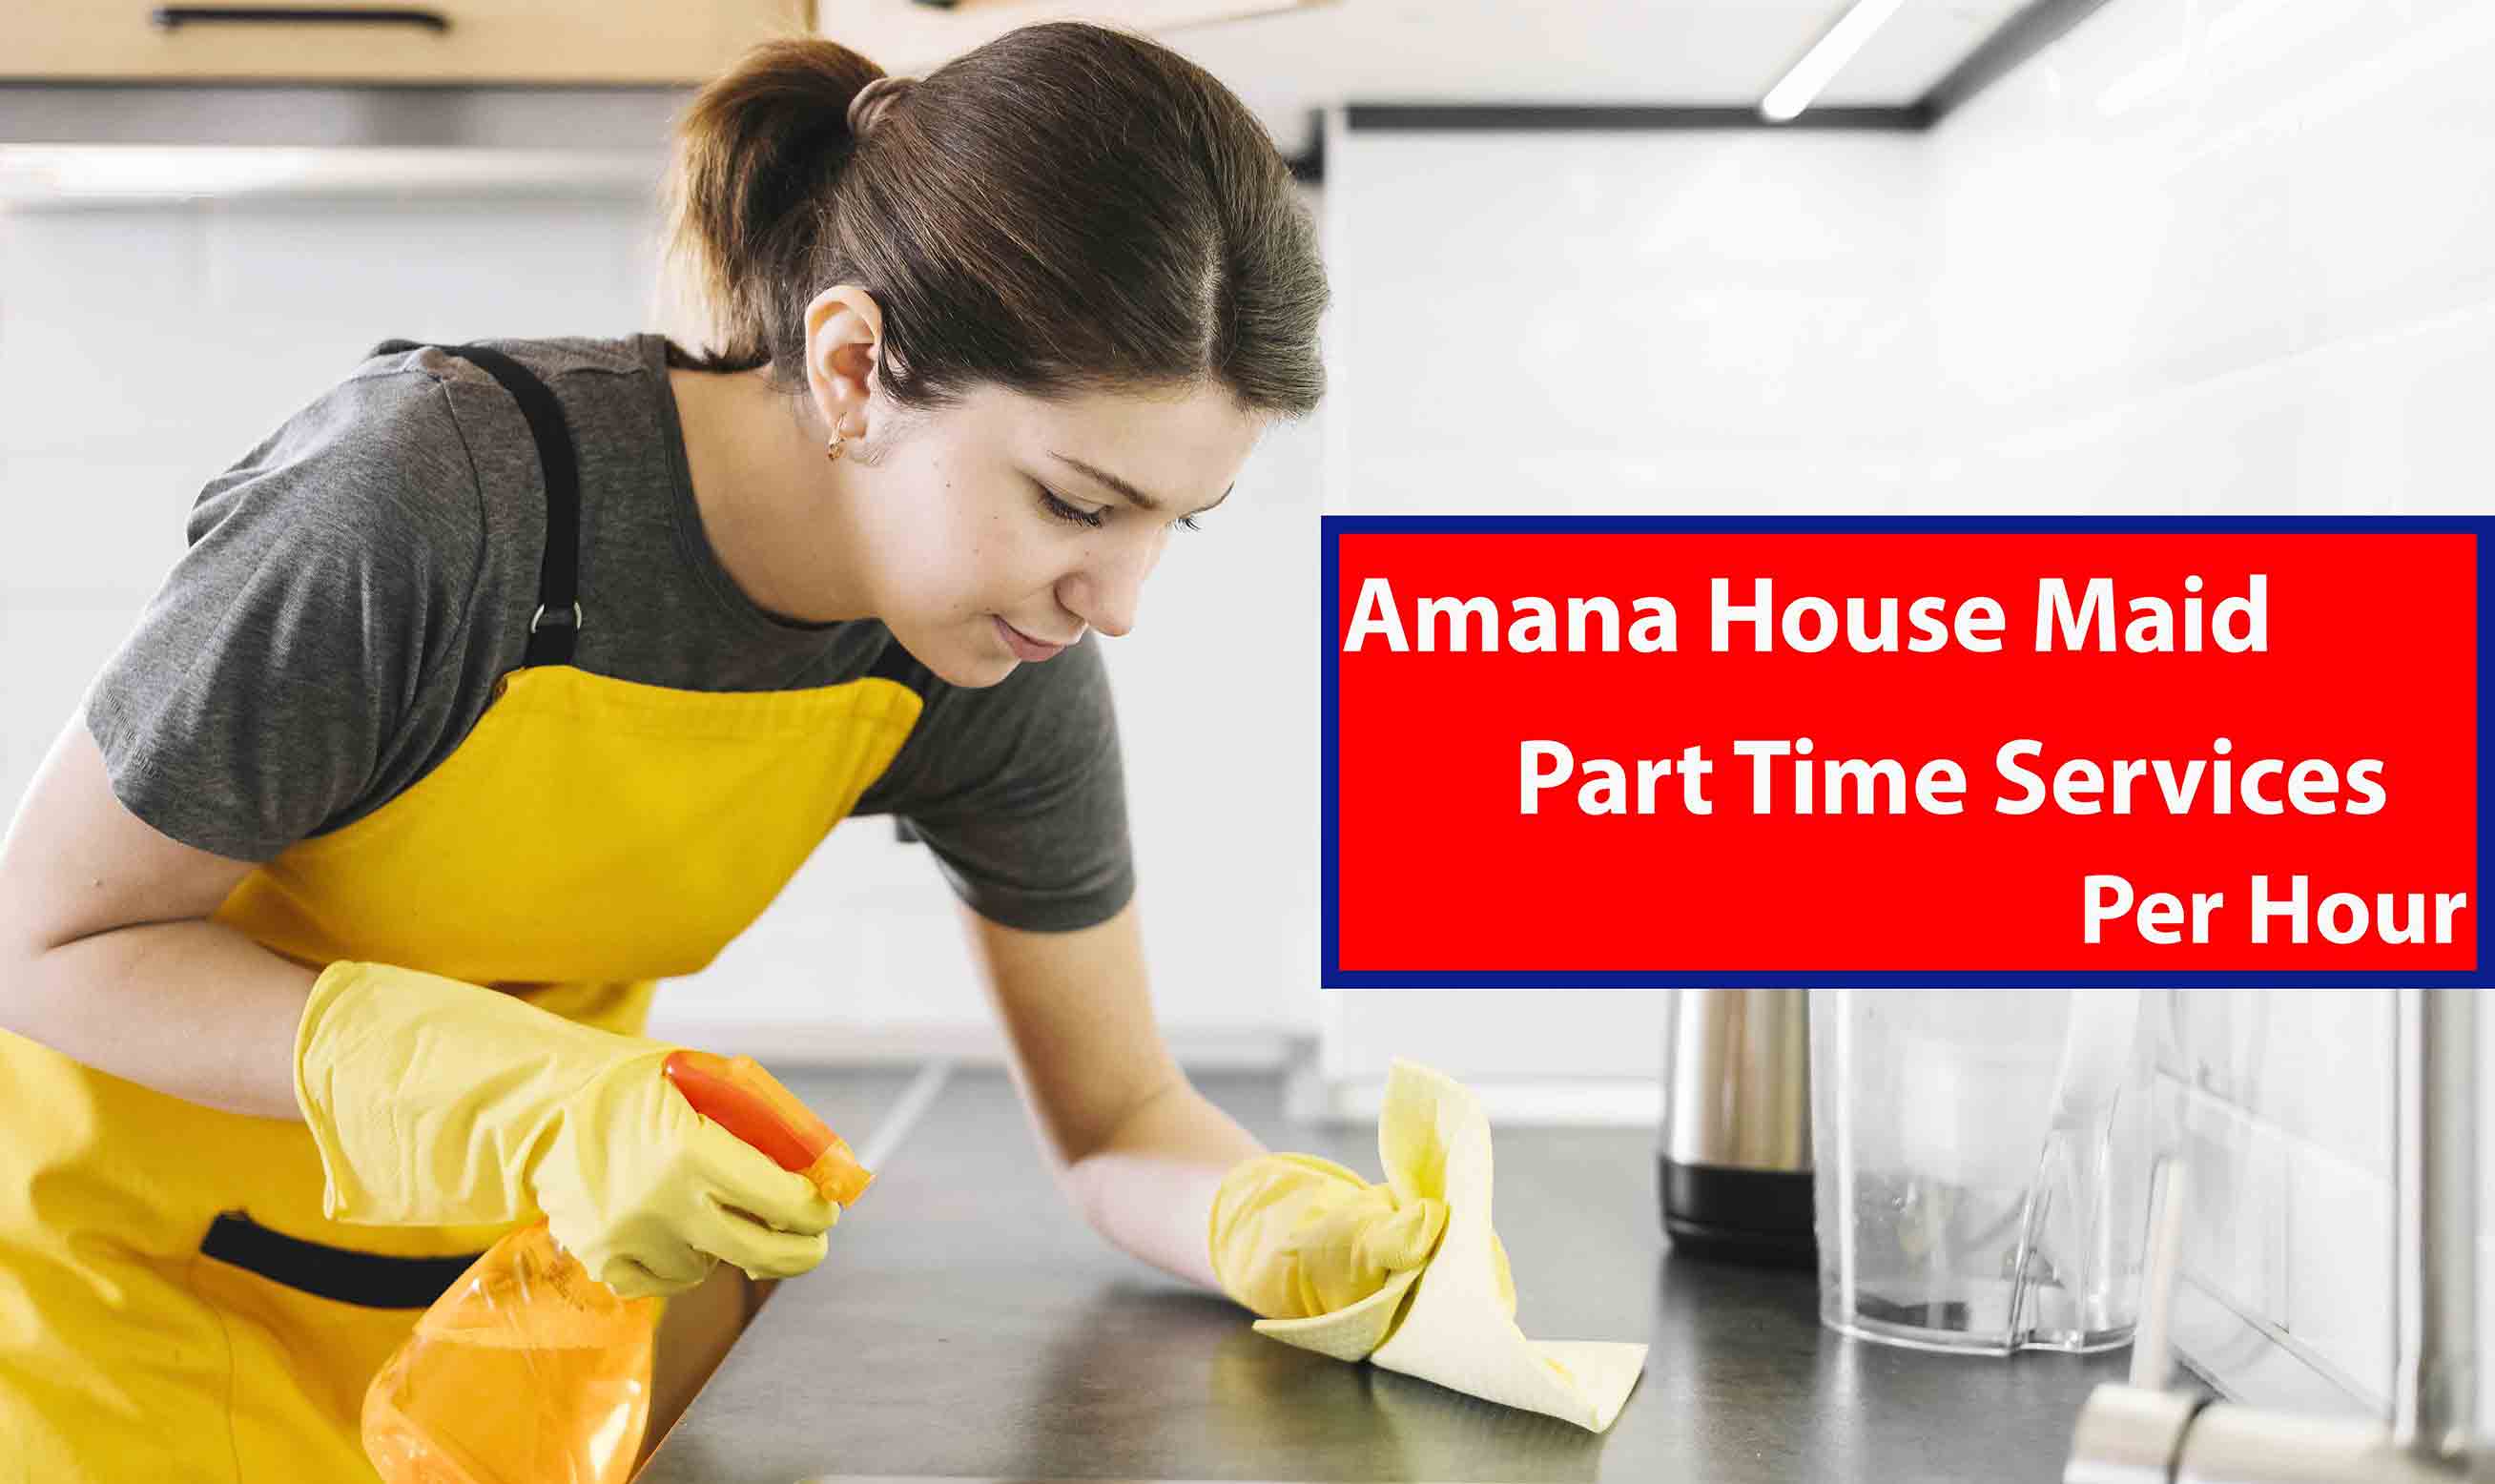 AL AMANA HOUSE MAID SERVICE ABU DHABI housemaid abu dhabi, maids in